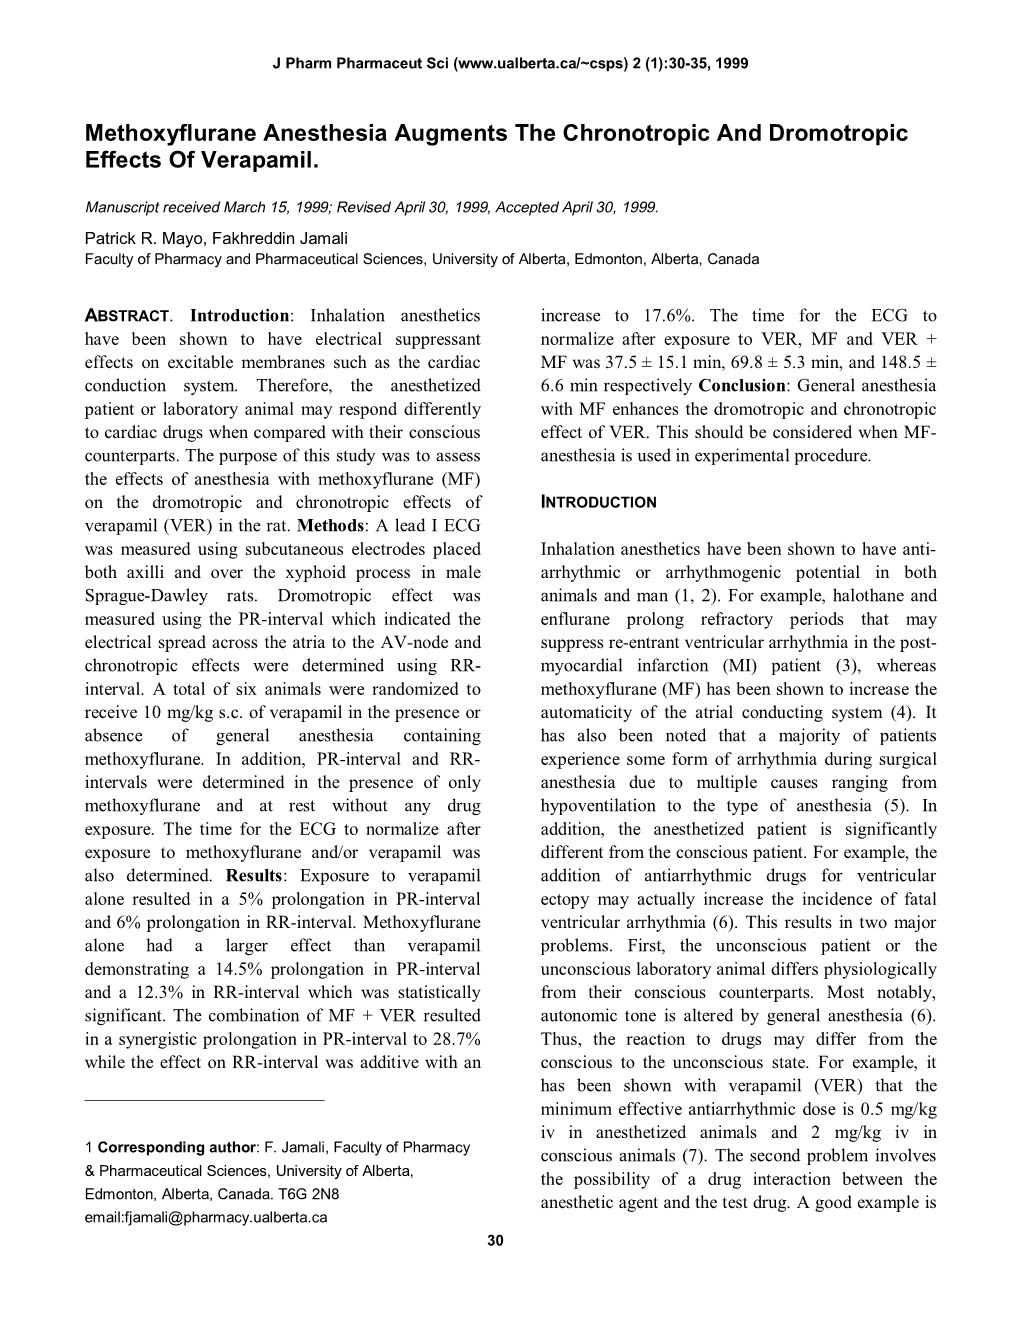 Methoxyflurane Anesthesia Augments the Chronotropic and Dromotropic Effects of Verapamil